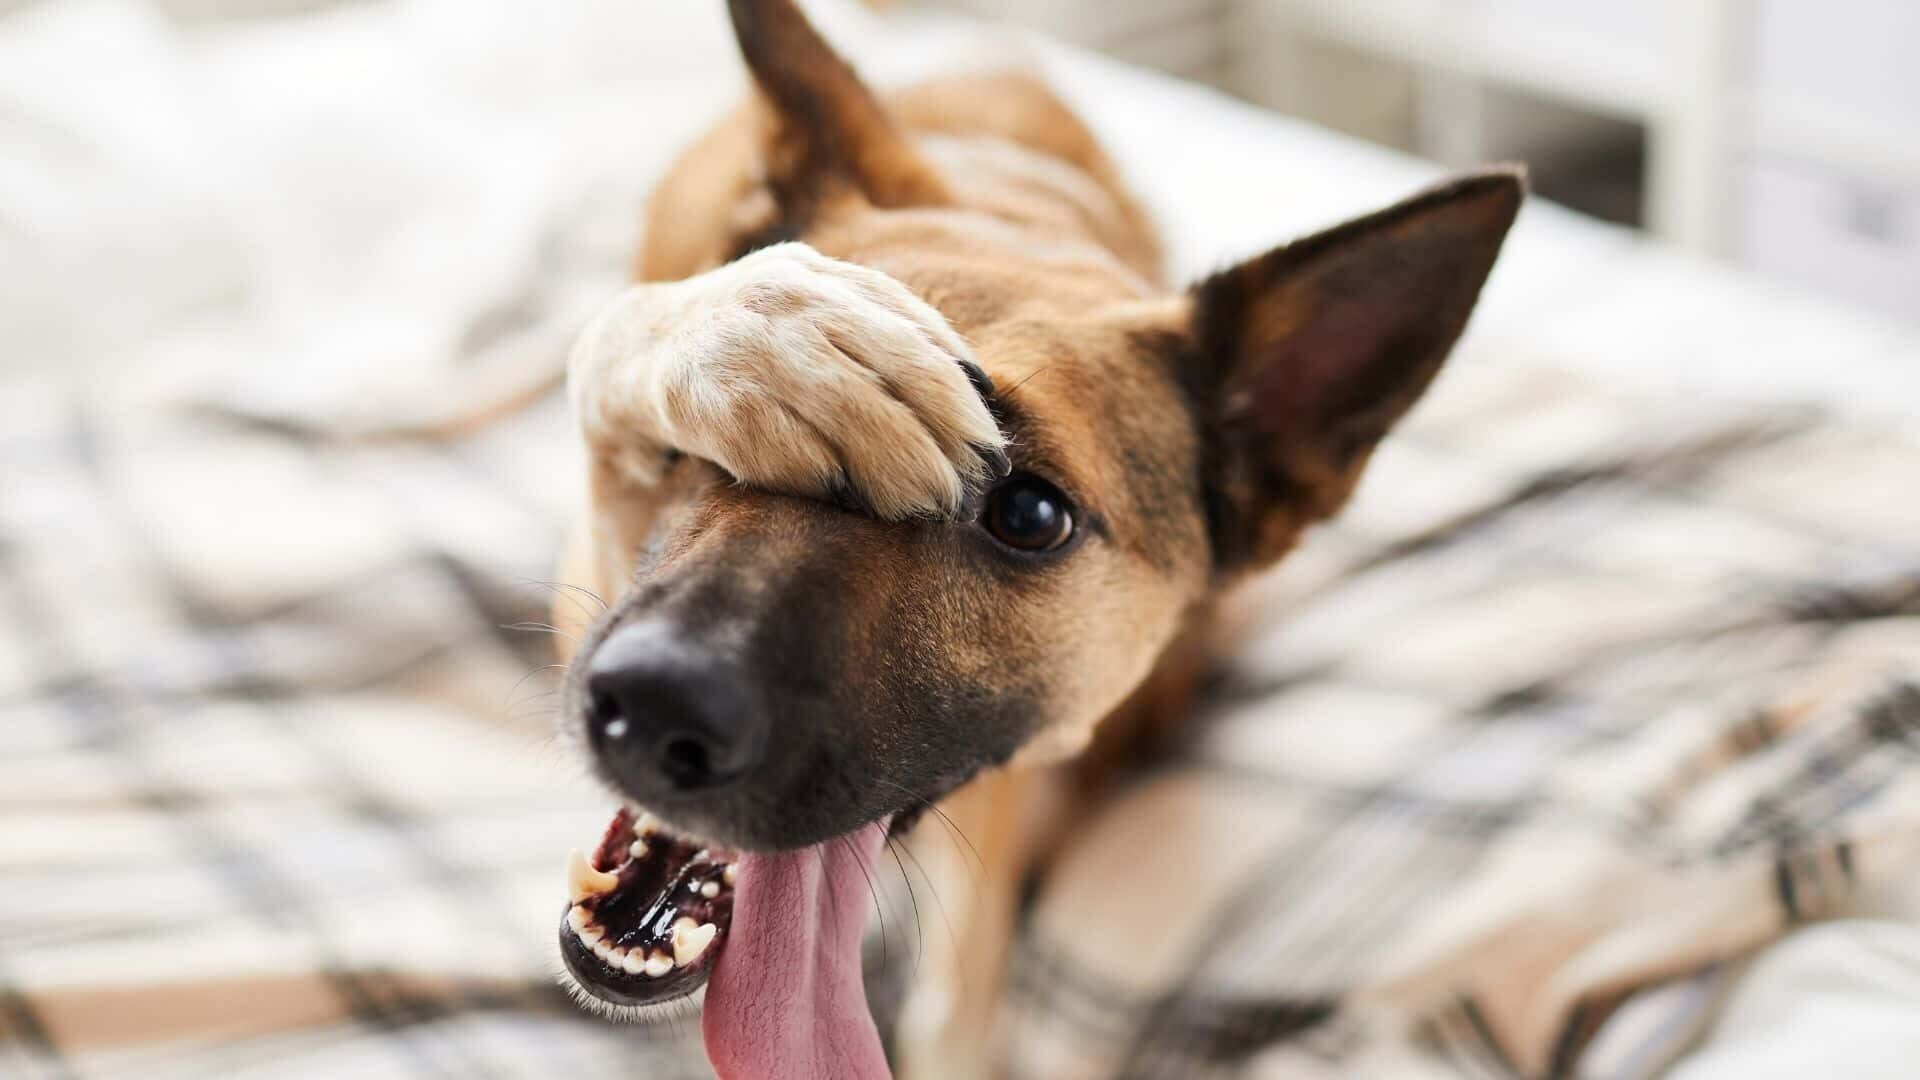 Dog licking bedsheets